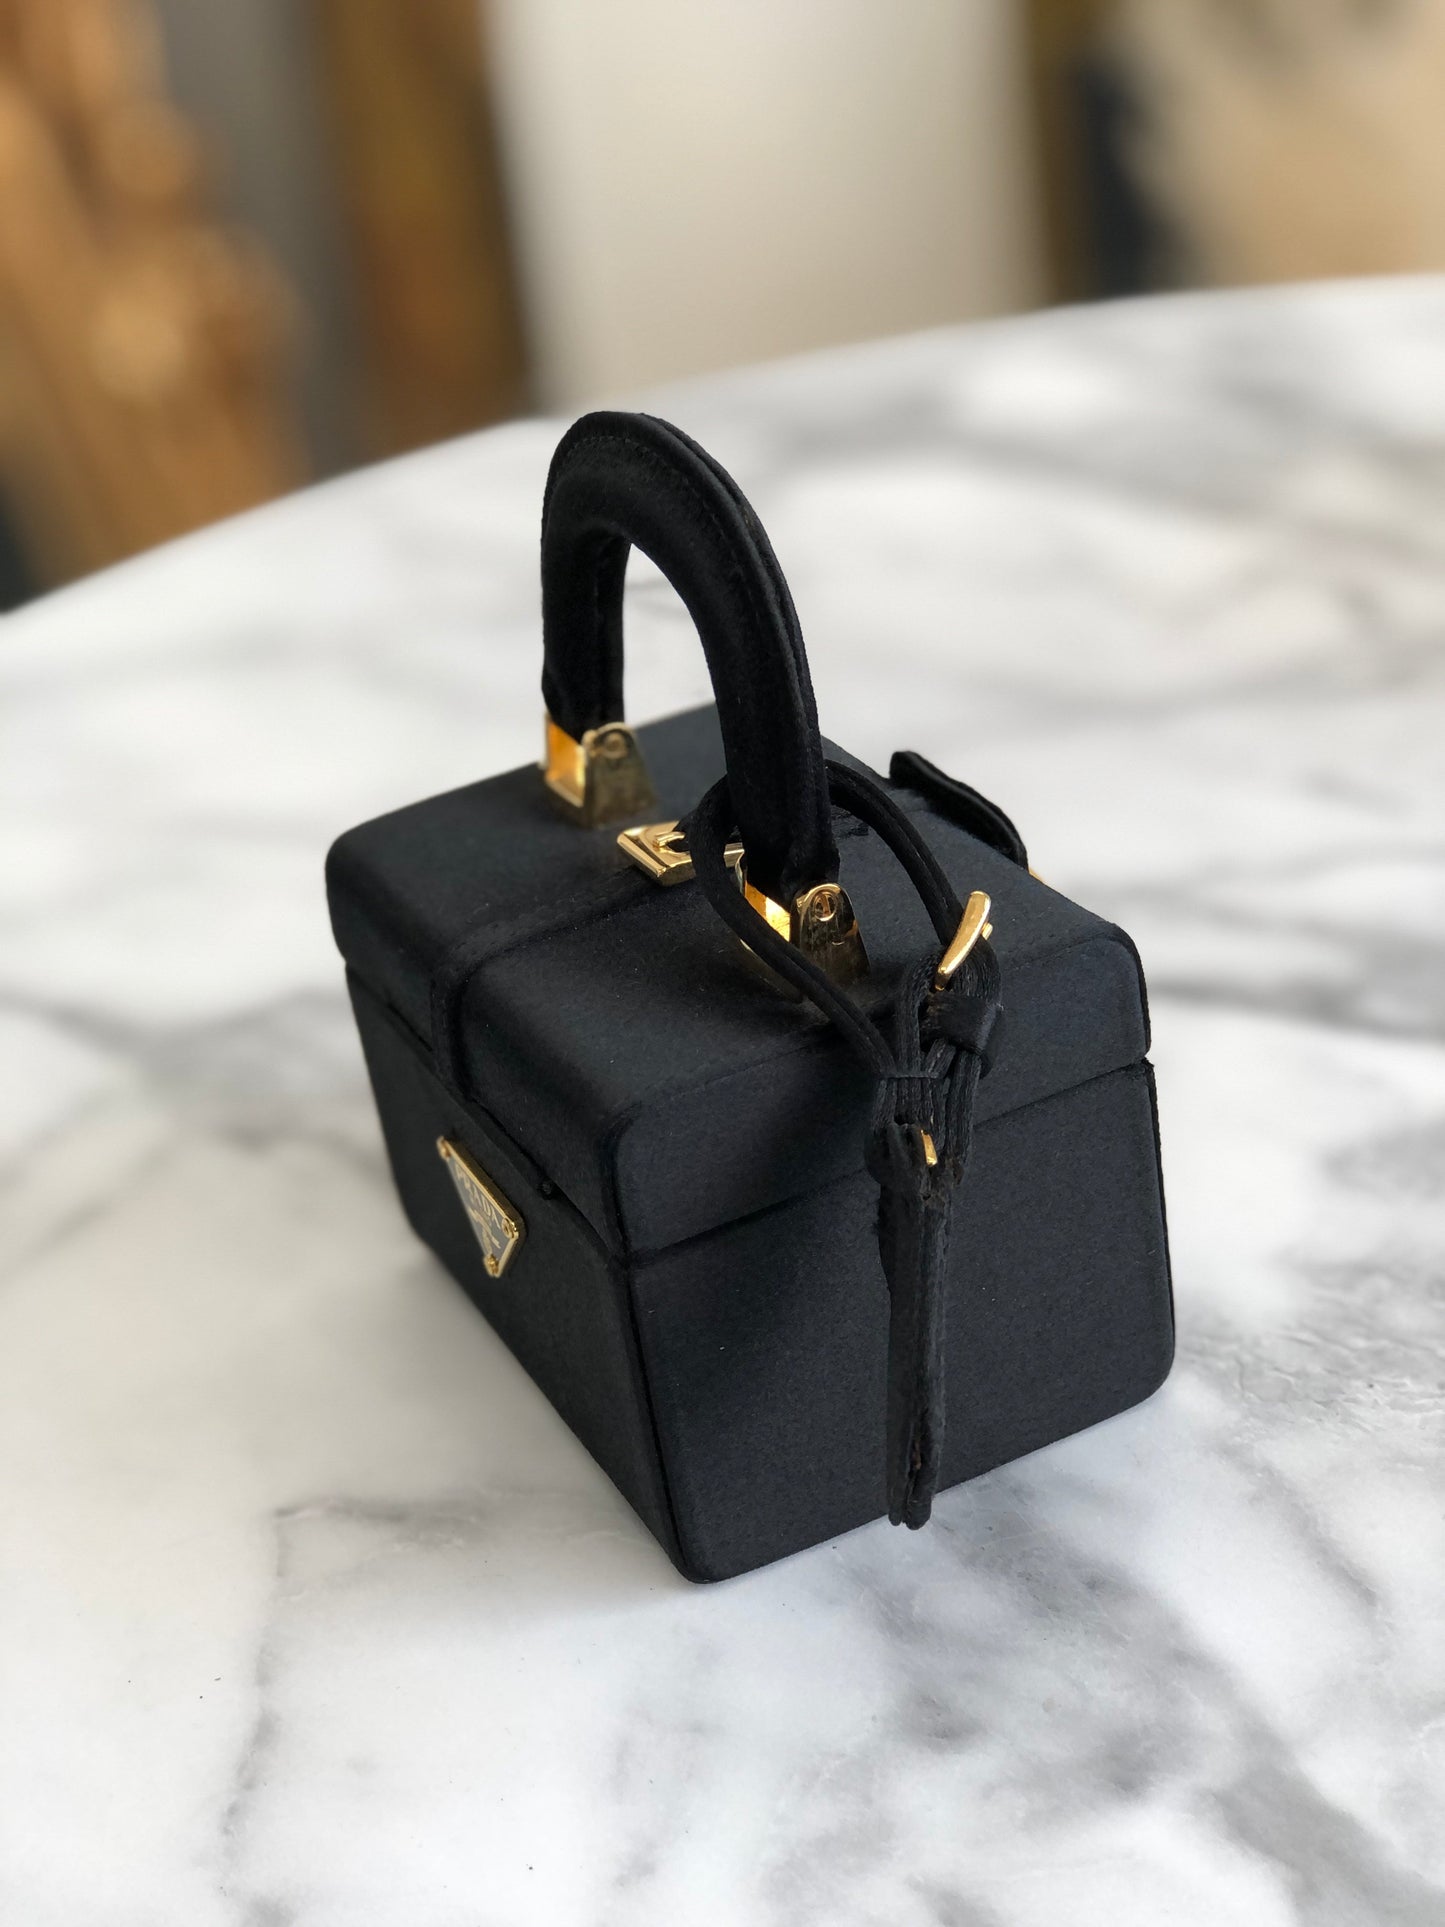 PRADA Satin Leather Jewelry Box Hand bag Vanity bag Black g6hibi